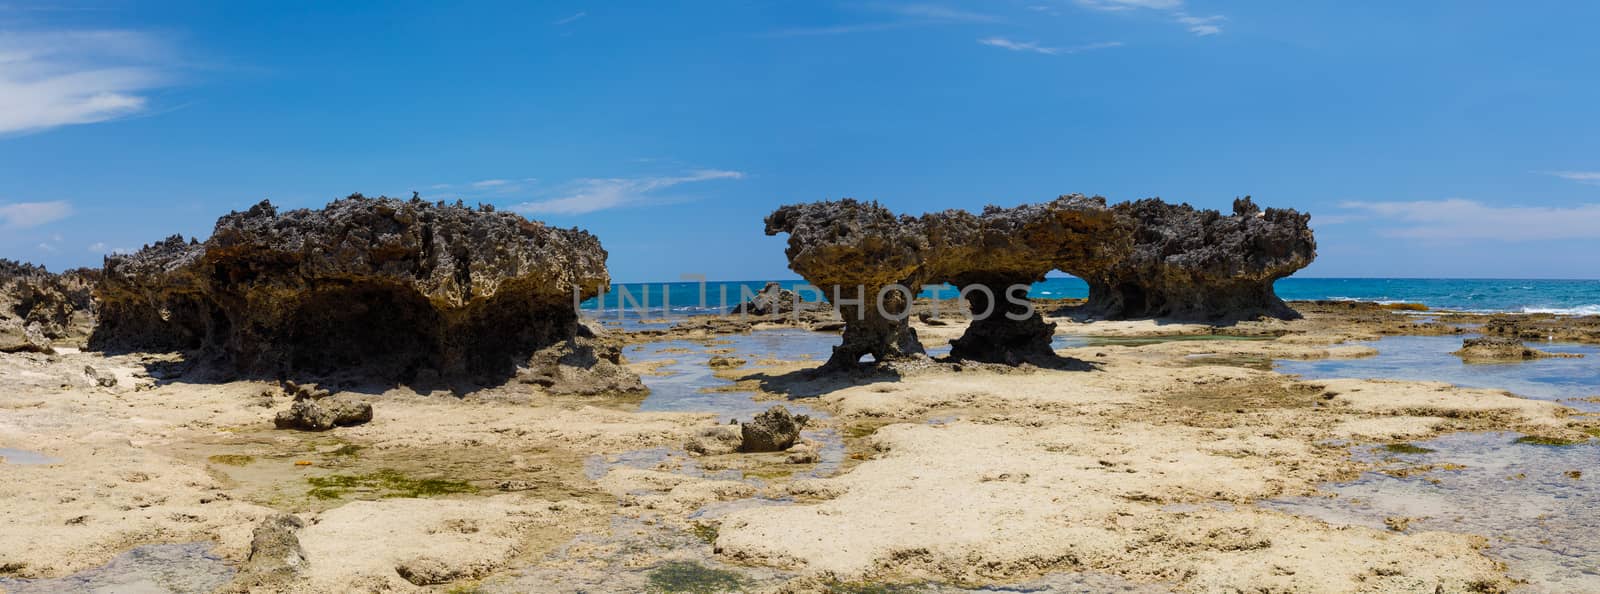 Beautiful rocky beach in Diego Suarez bay in Indian ocean,  Madagascar beautiful picturesque nature landscape